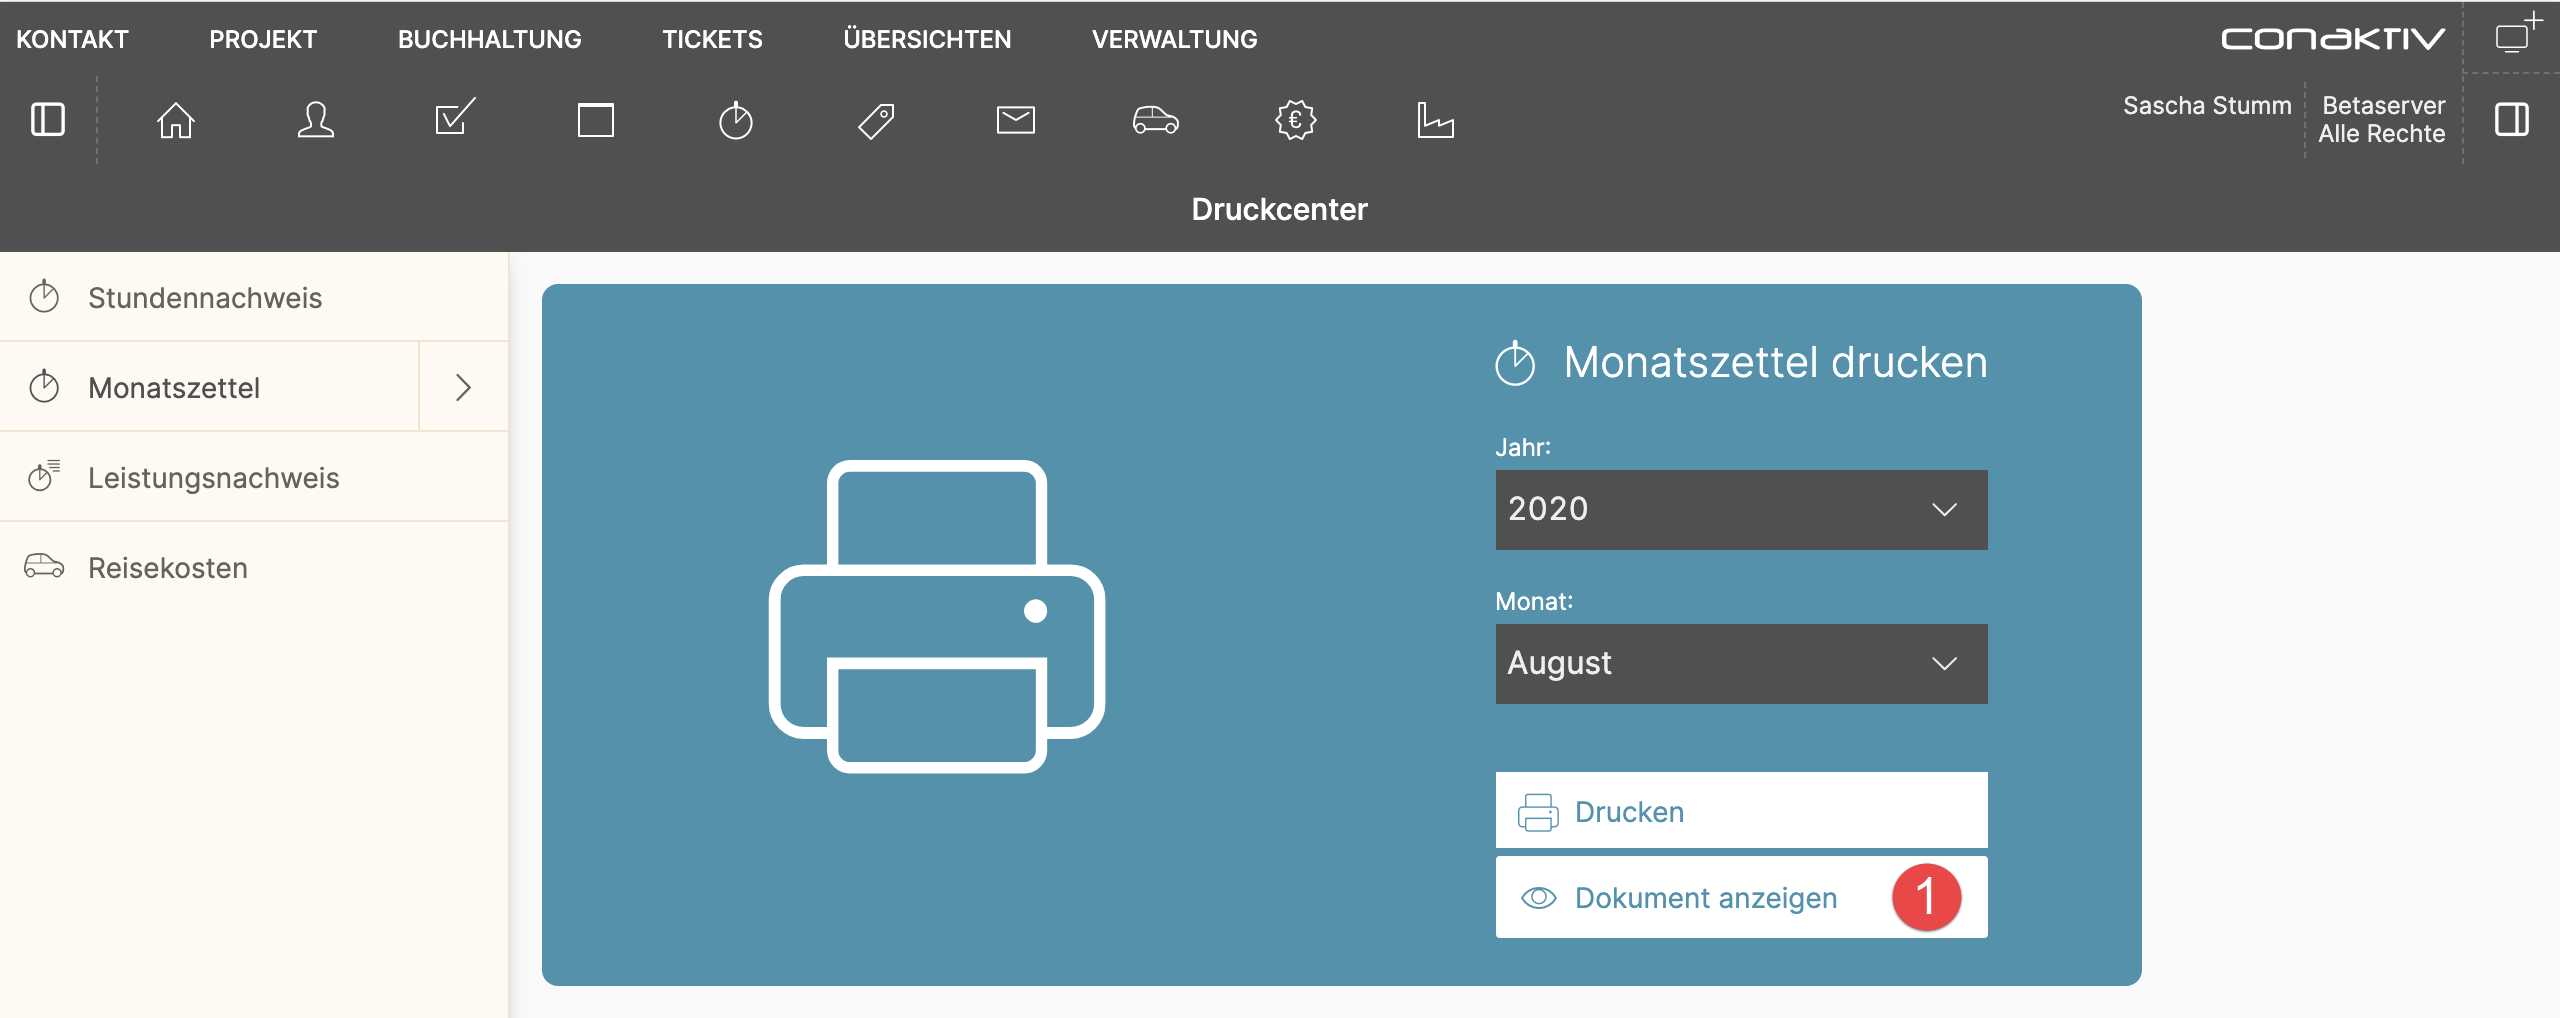 Druckcenter Monatszettel PDF bereit Desktop